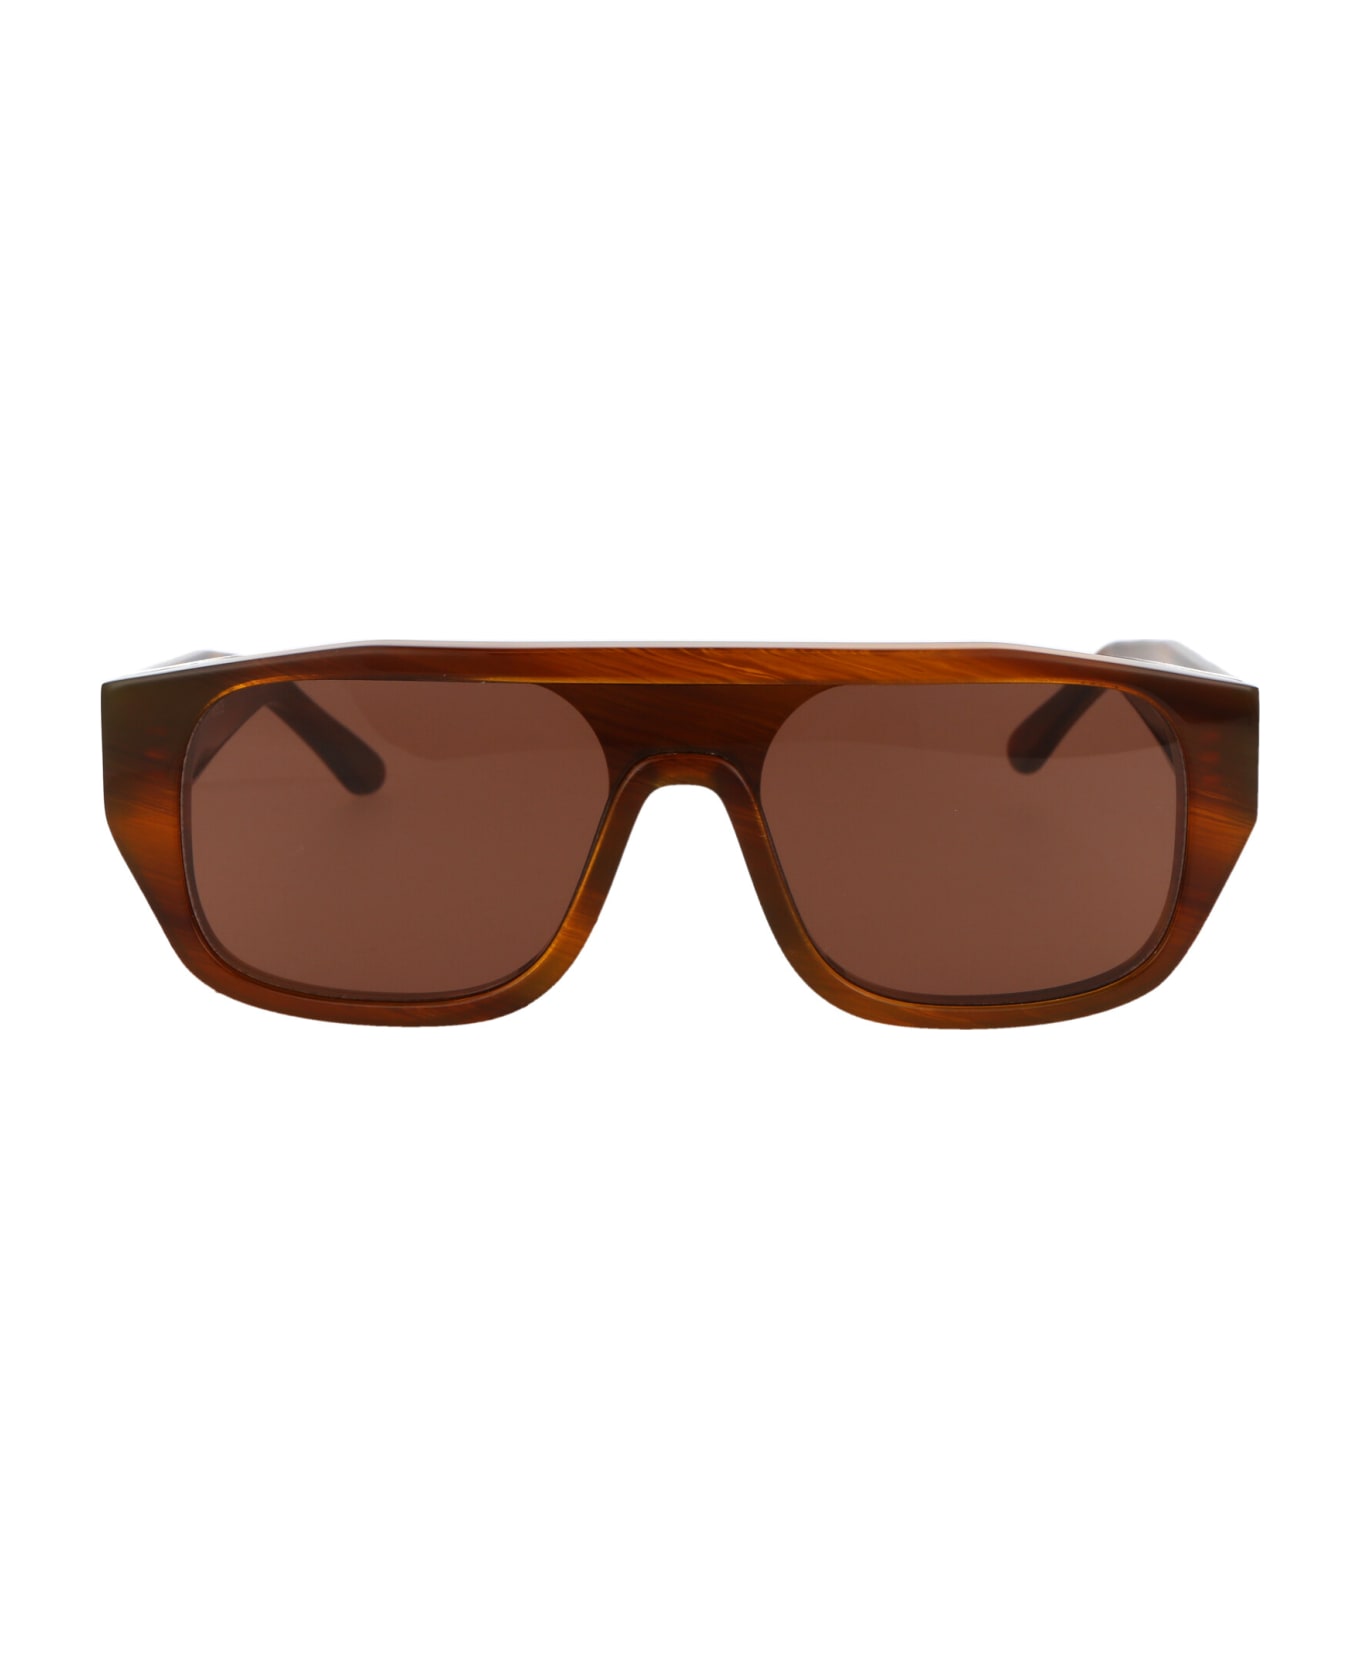 Thierry Lasry Klassy Sunglasses - 821 BROWN サングラス